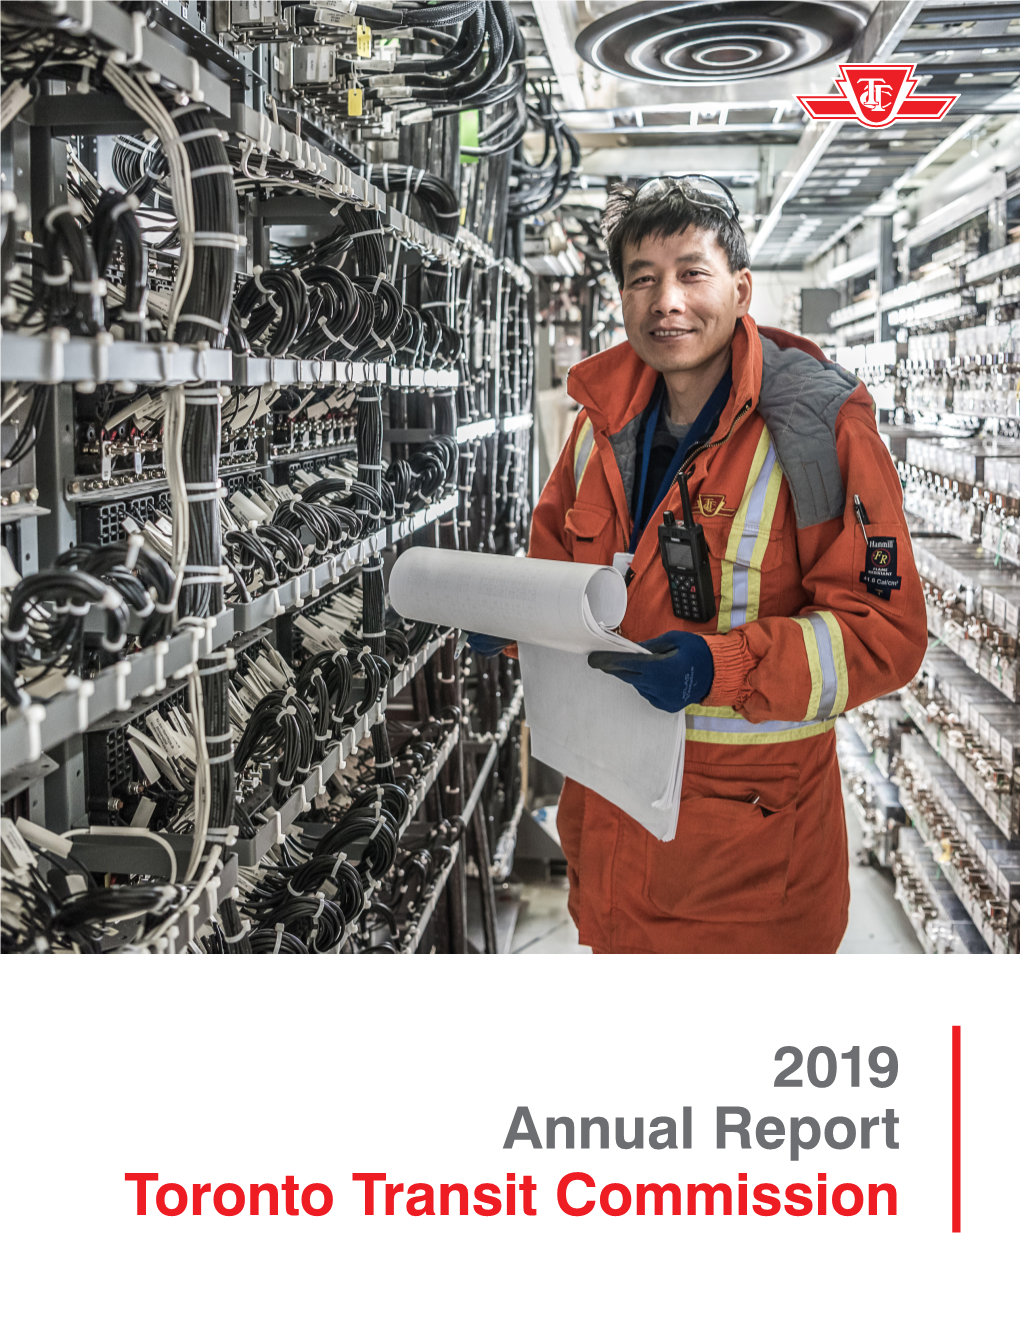 2019 Annual Report Toronto Transit Commission